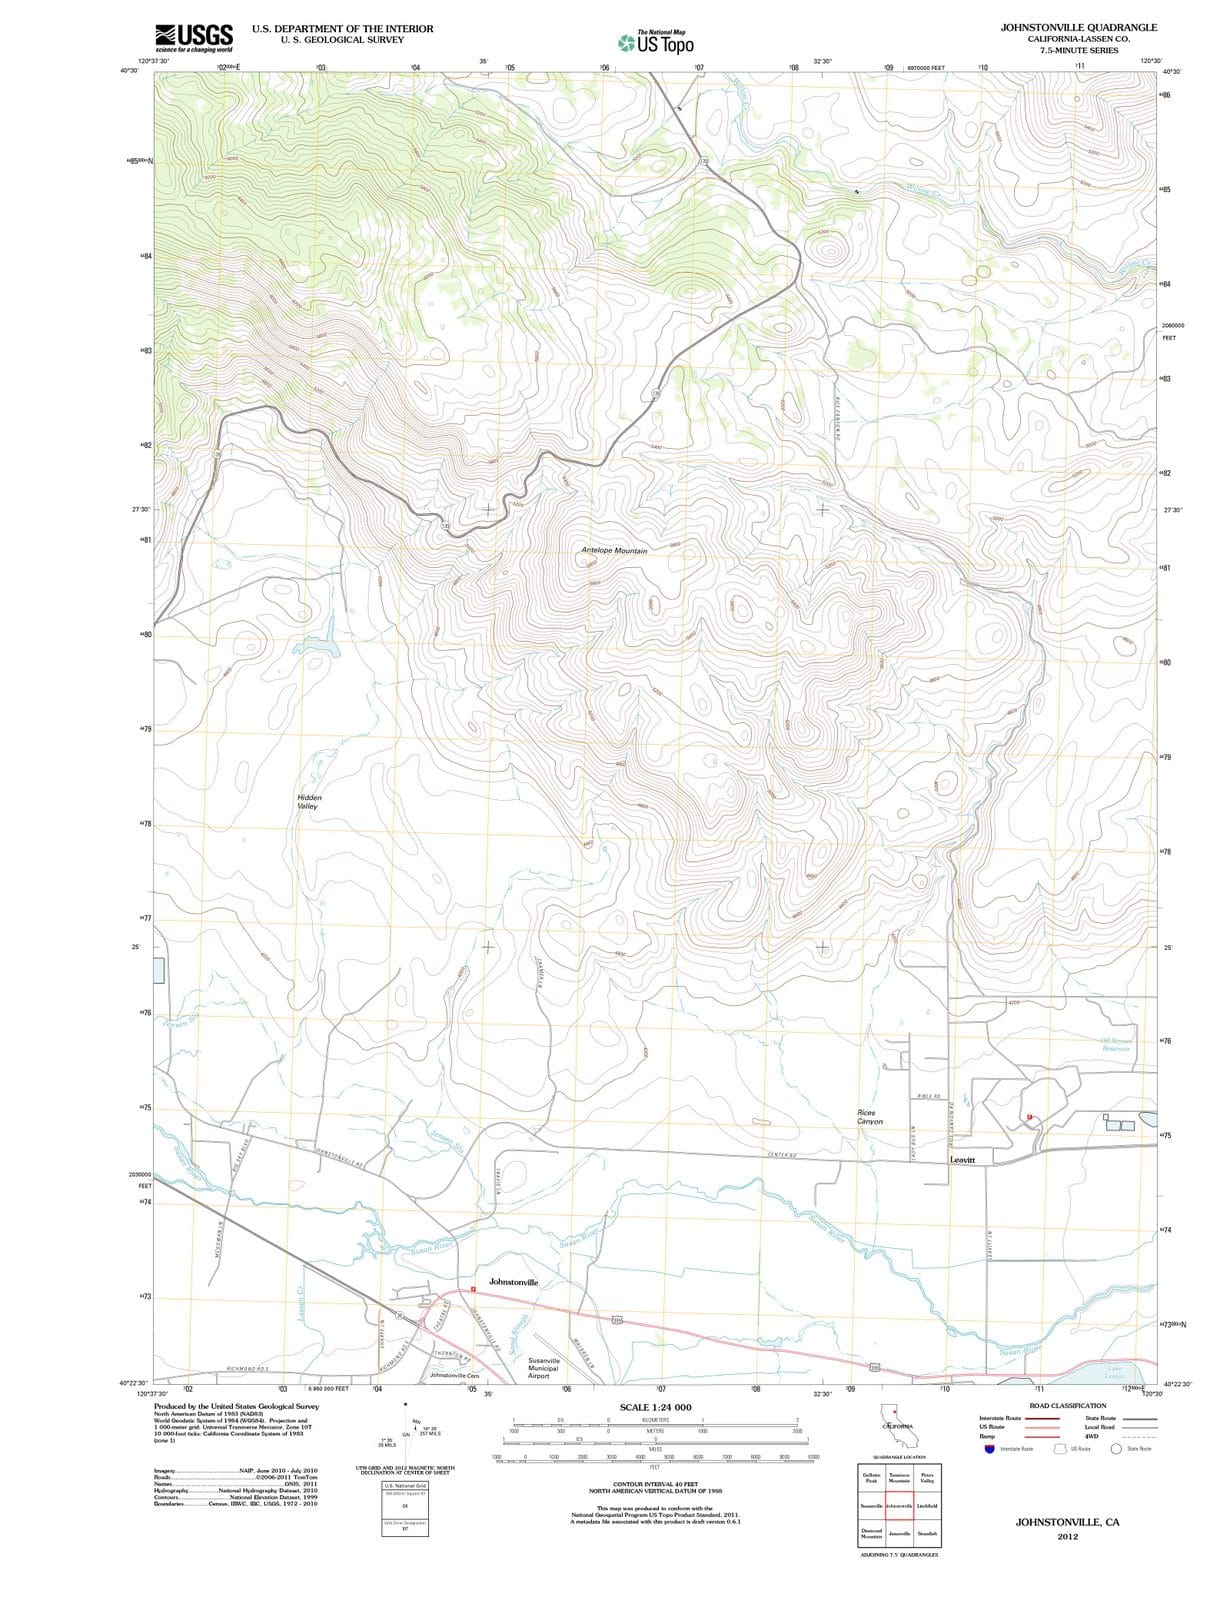 2012 Johnstonville, CA - California - USGS Topographic Map